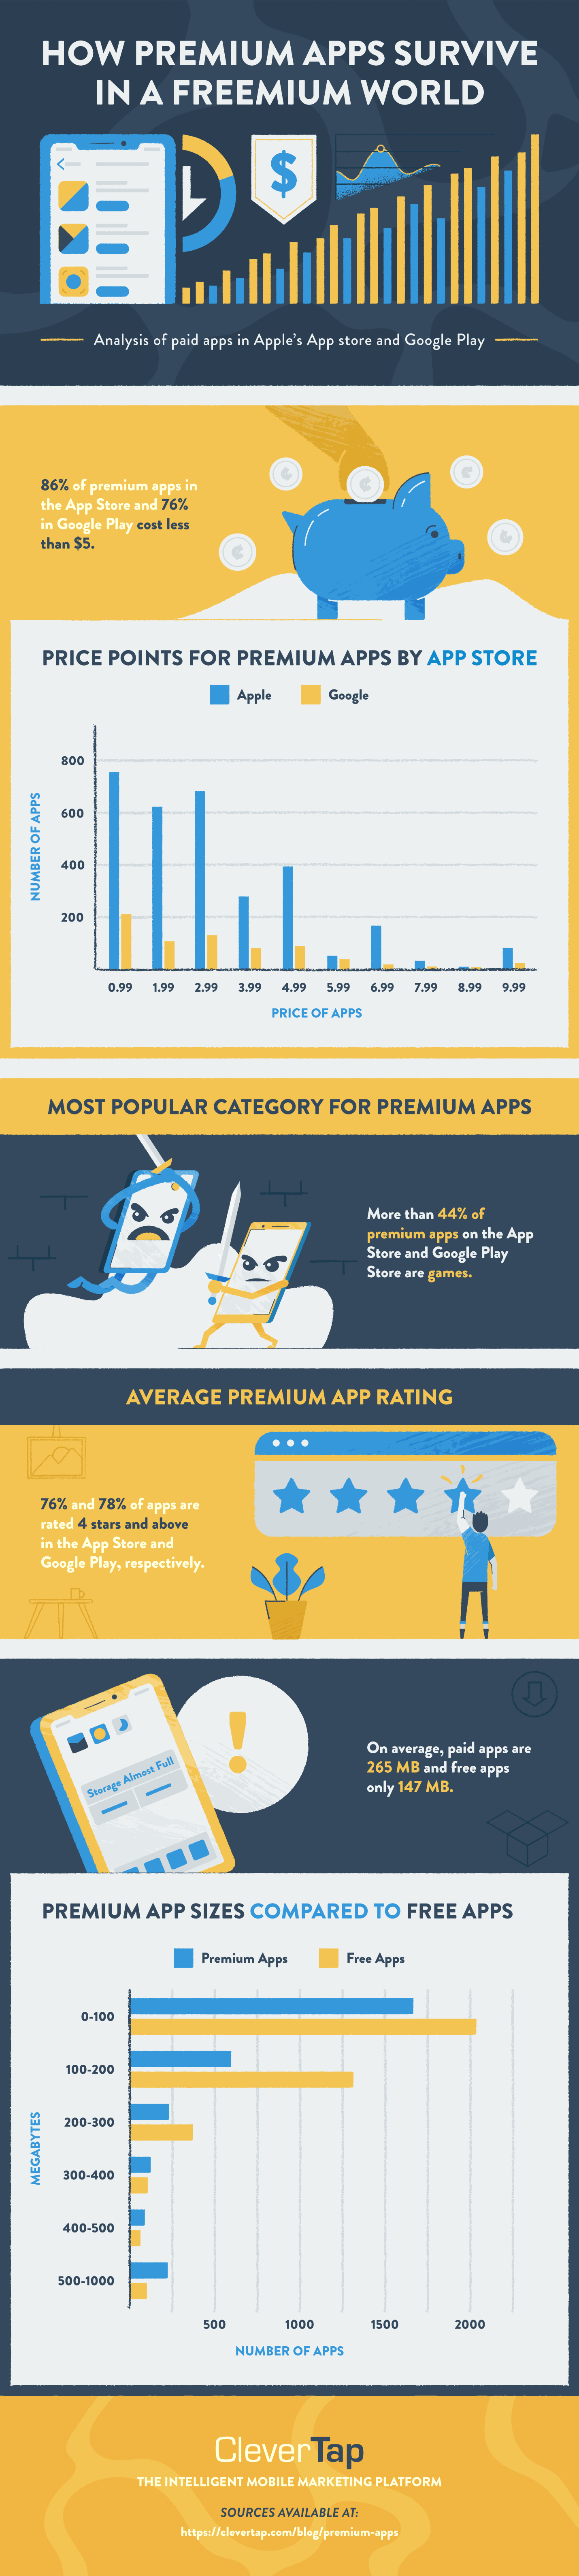 paid app data study infographic